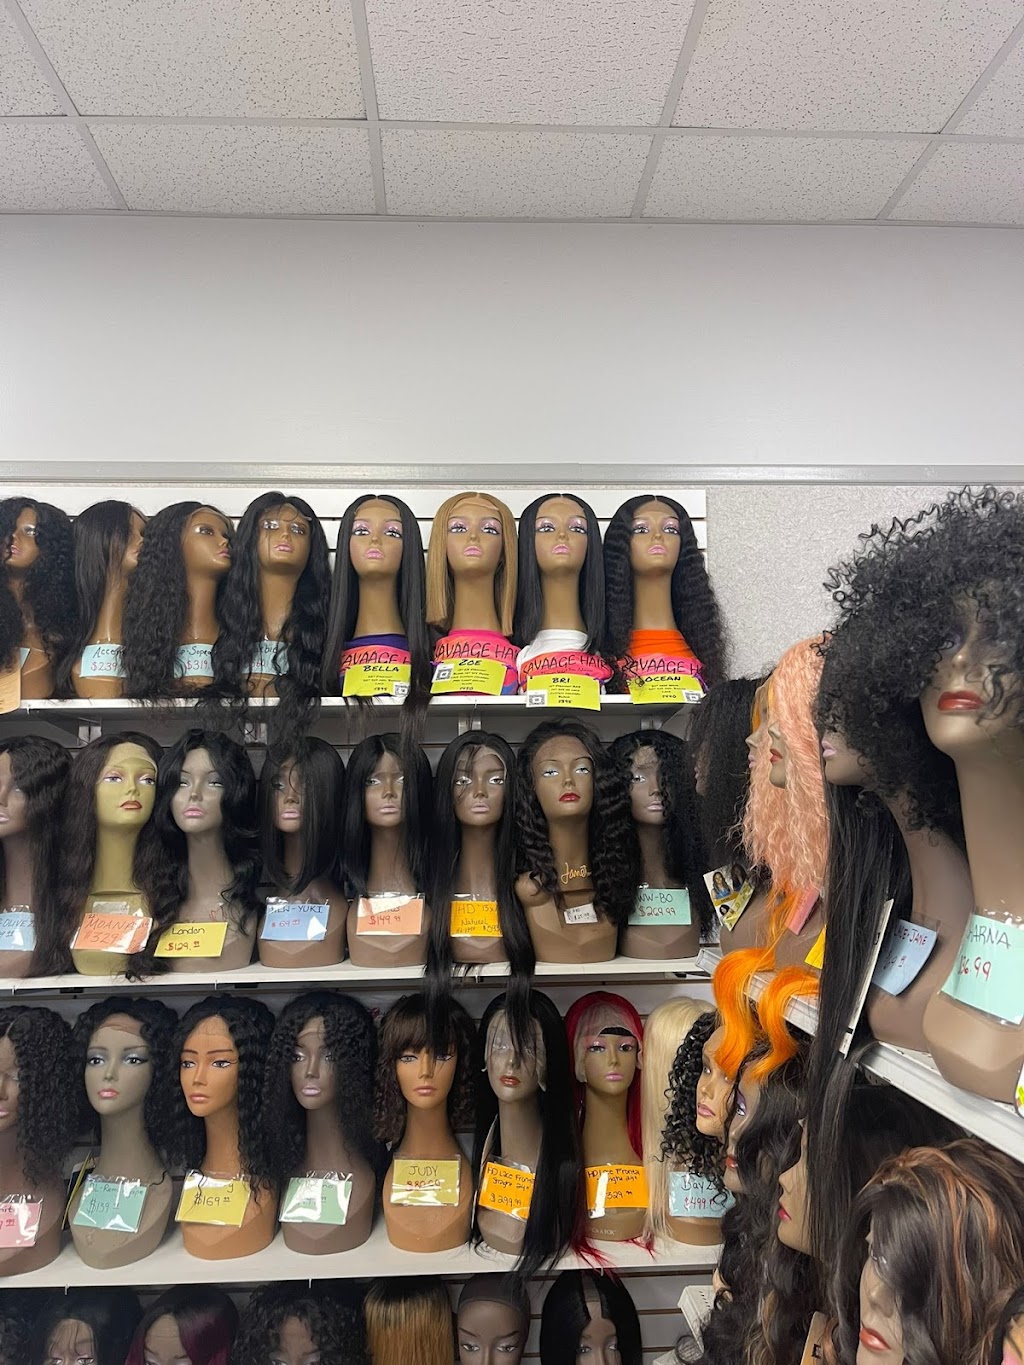 SAVAAGE Hair | Systahood II Beauty Supply, 1434 Knox Ave, Easton, PA 18040 | Phone: (484) 929-0388